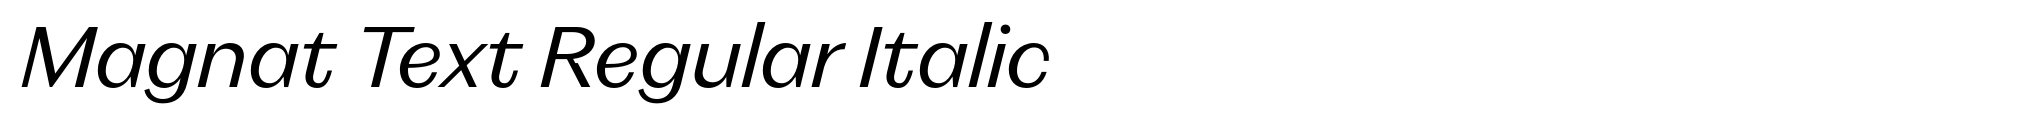 Magnat Text Regular Italic image